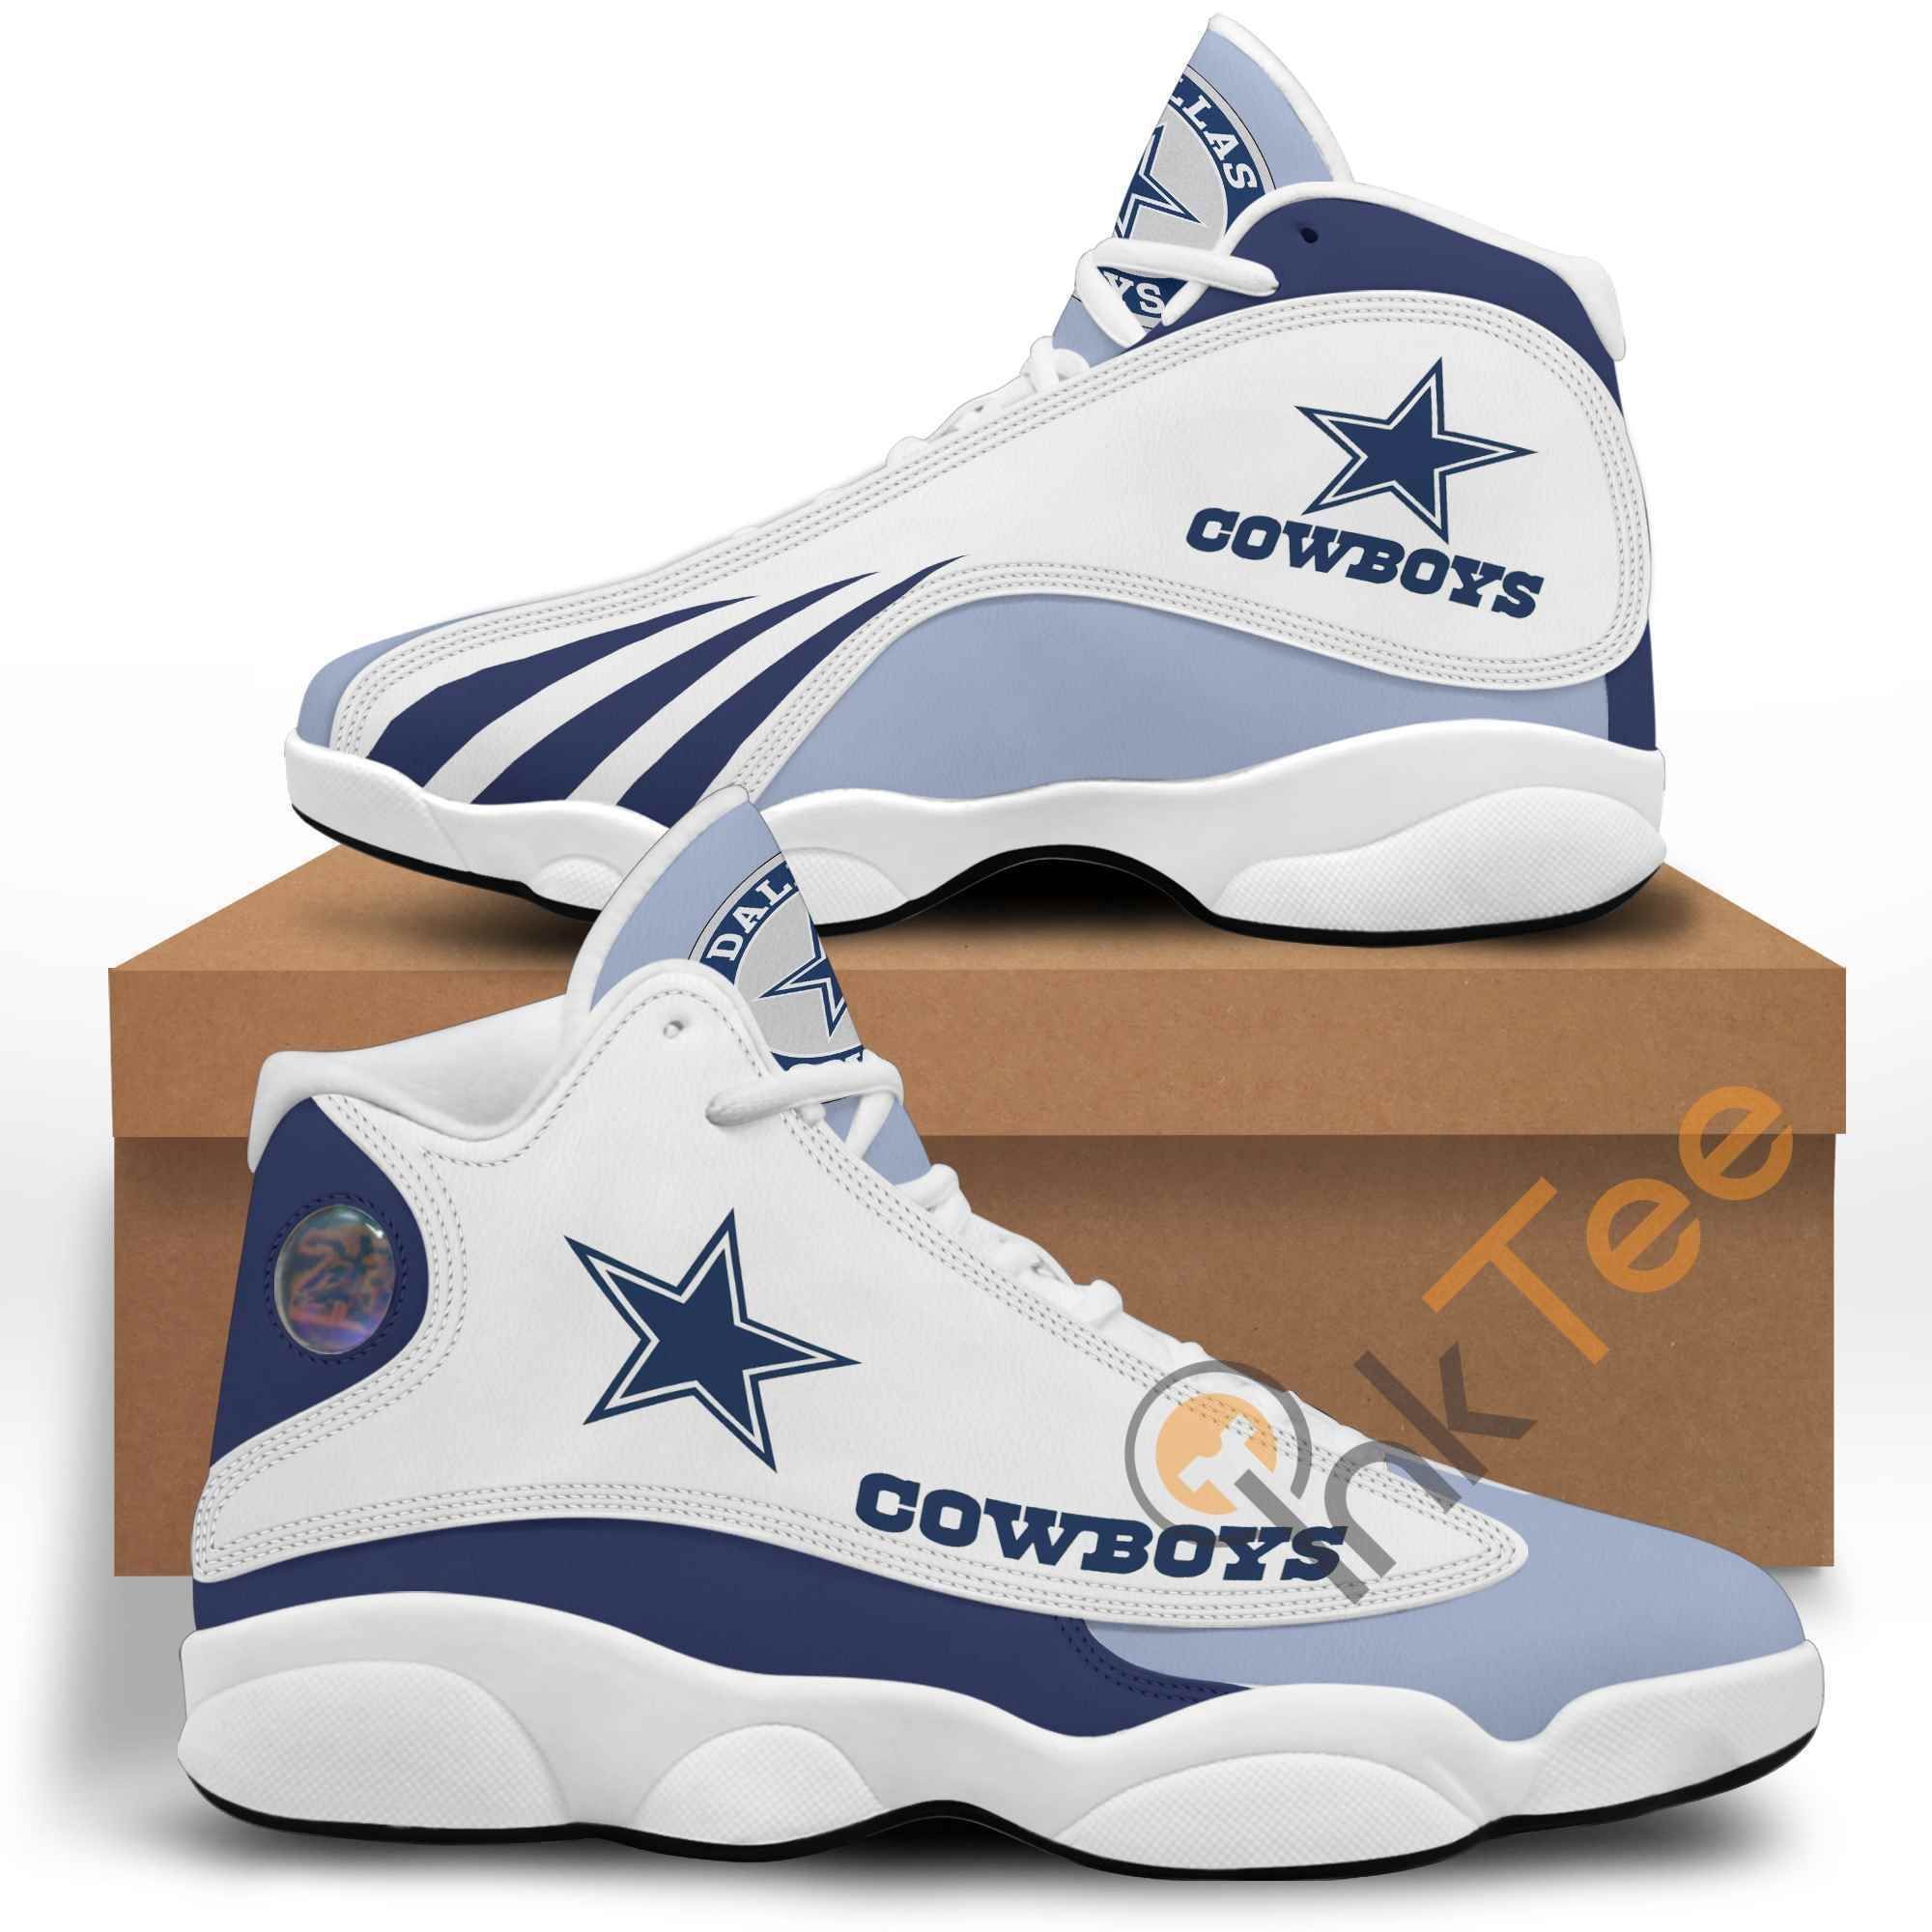 Nfl dallas cowboys air jordan 13s customized shoes - men / us 12